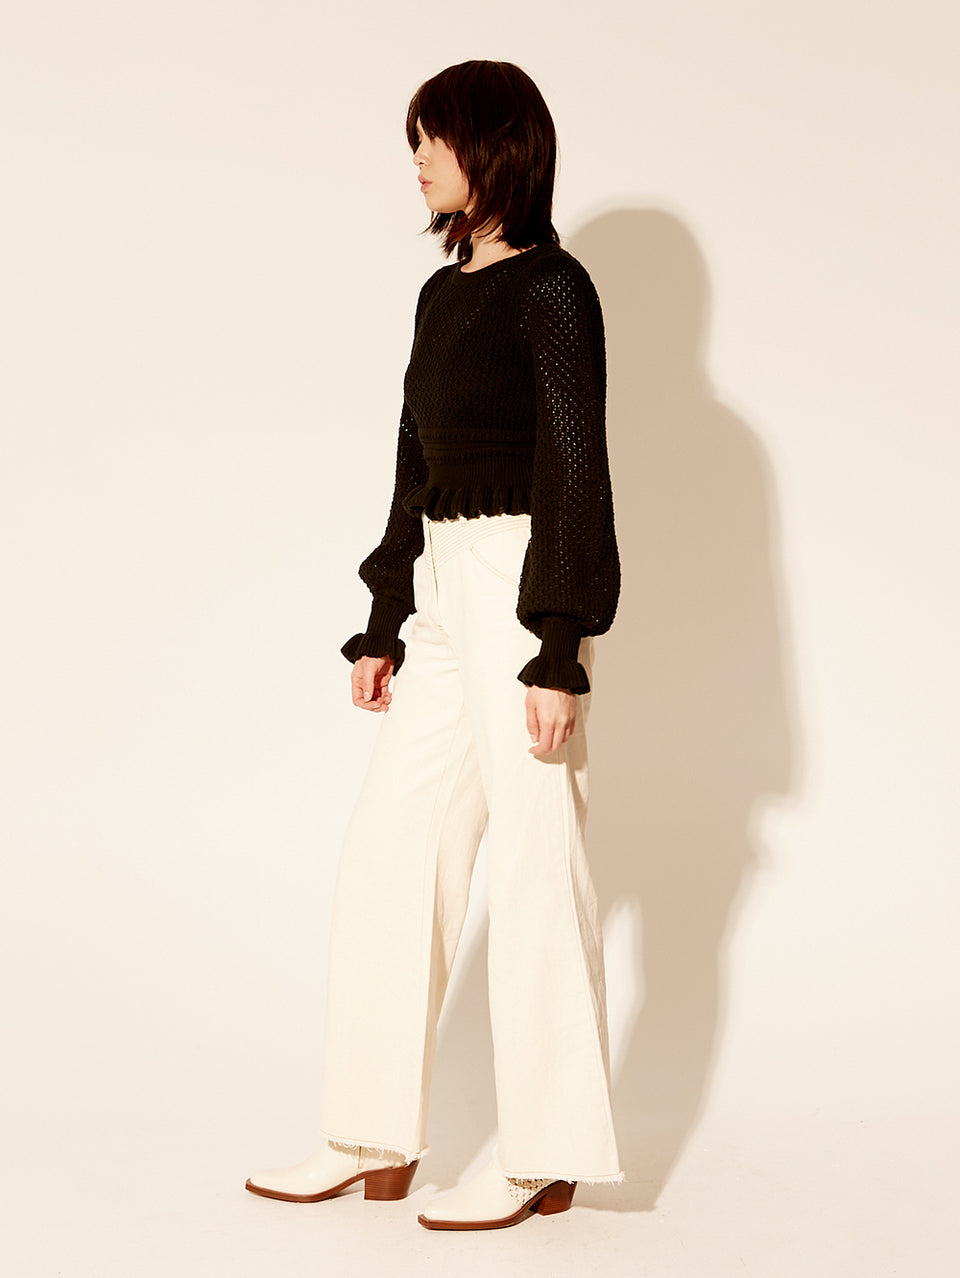 Rafaela Knit Top KIVARI | Model wears black knit top side view